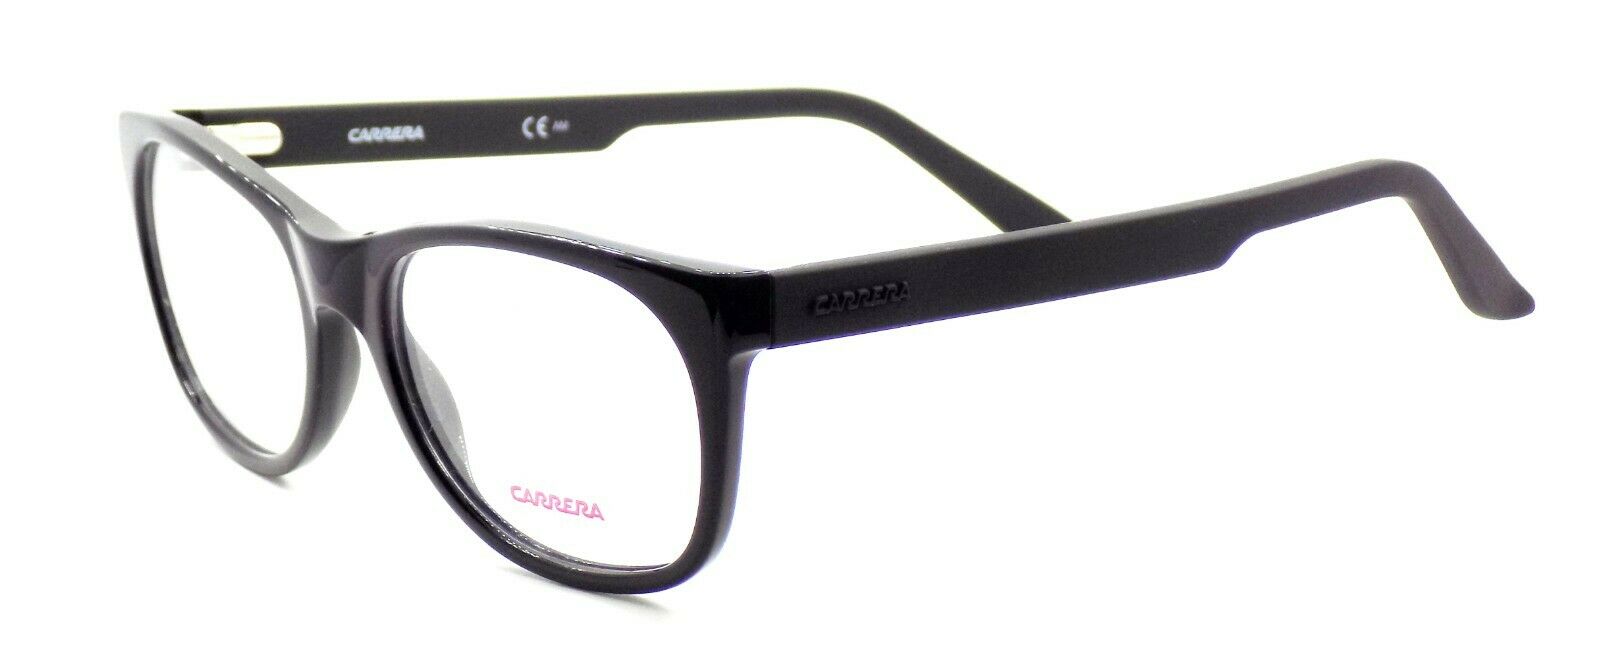 1-Carrera CA6652 KUN Unisex Eyeglasses Frames 51-18-140 Black + CASE-827886086764-IKSpecs